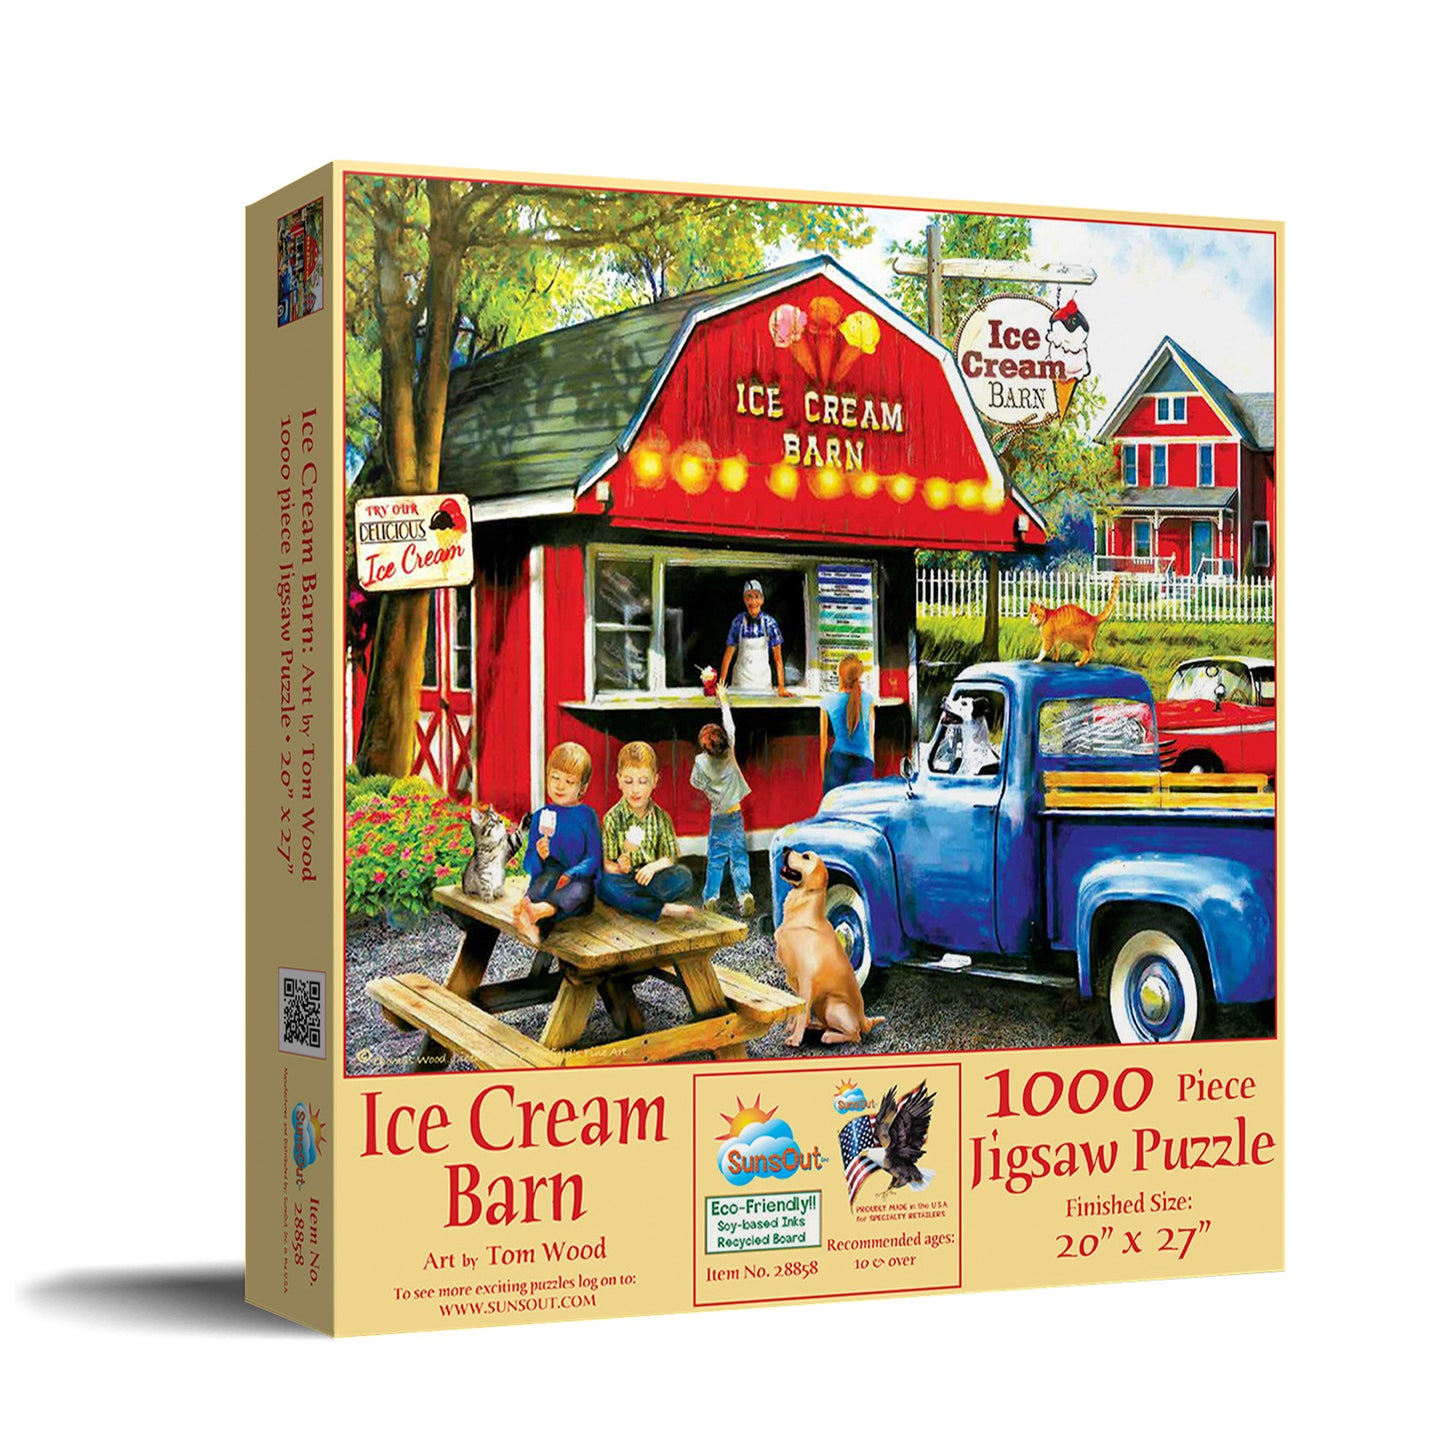 The Ice Cream Barn - 1000 Piece Jigsaw Puzzle